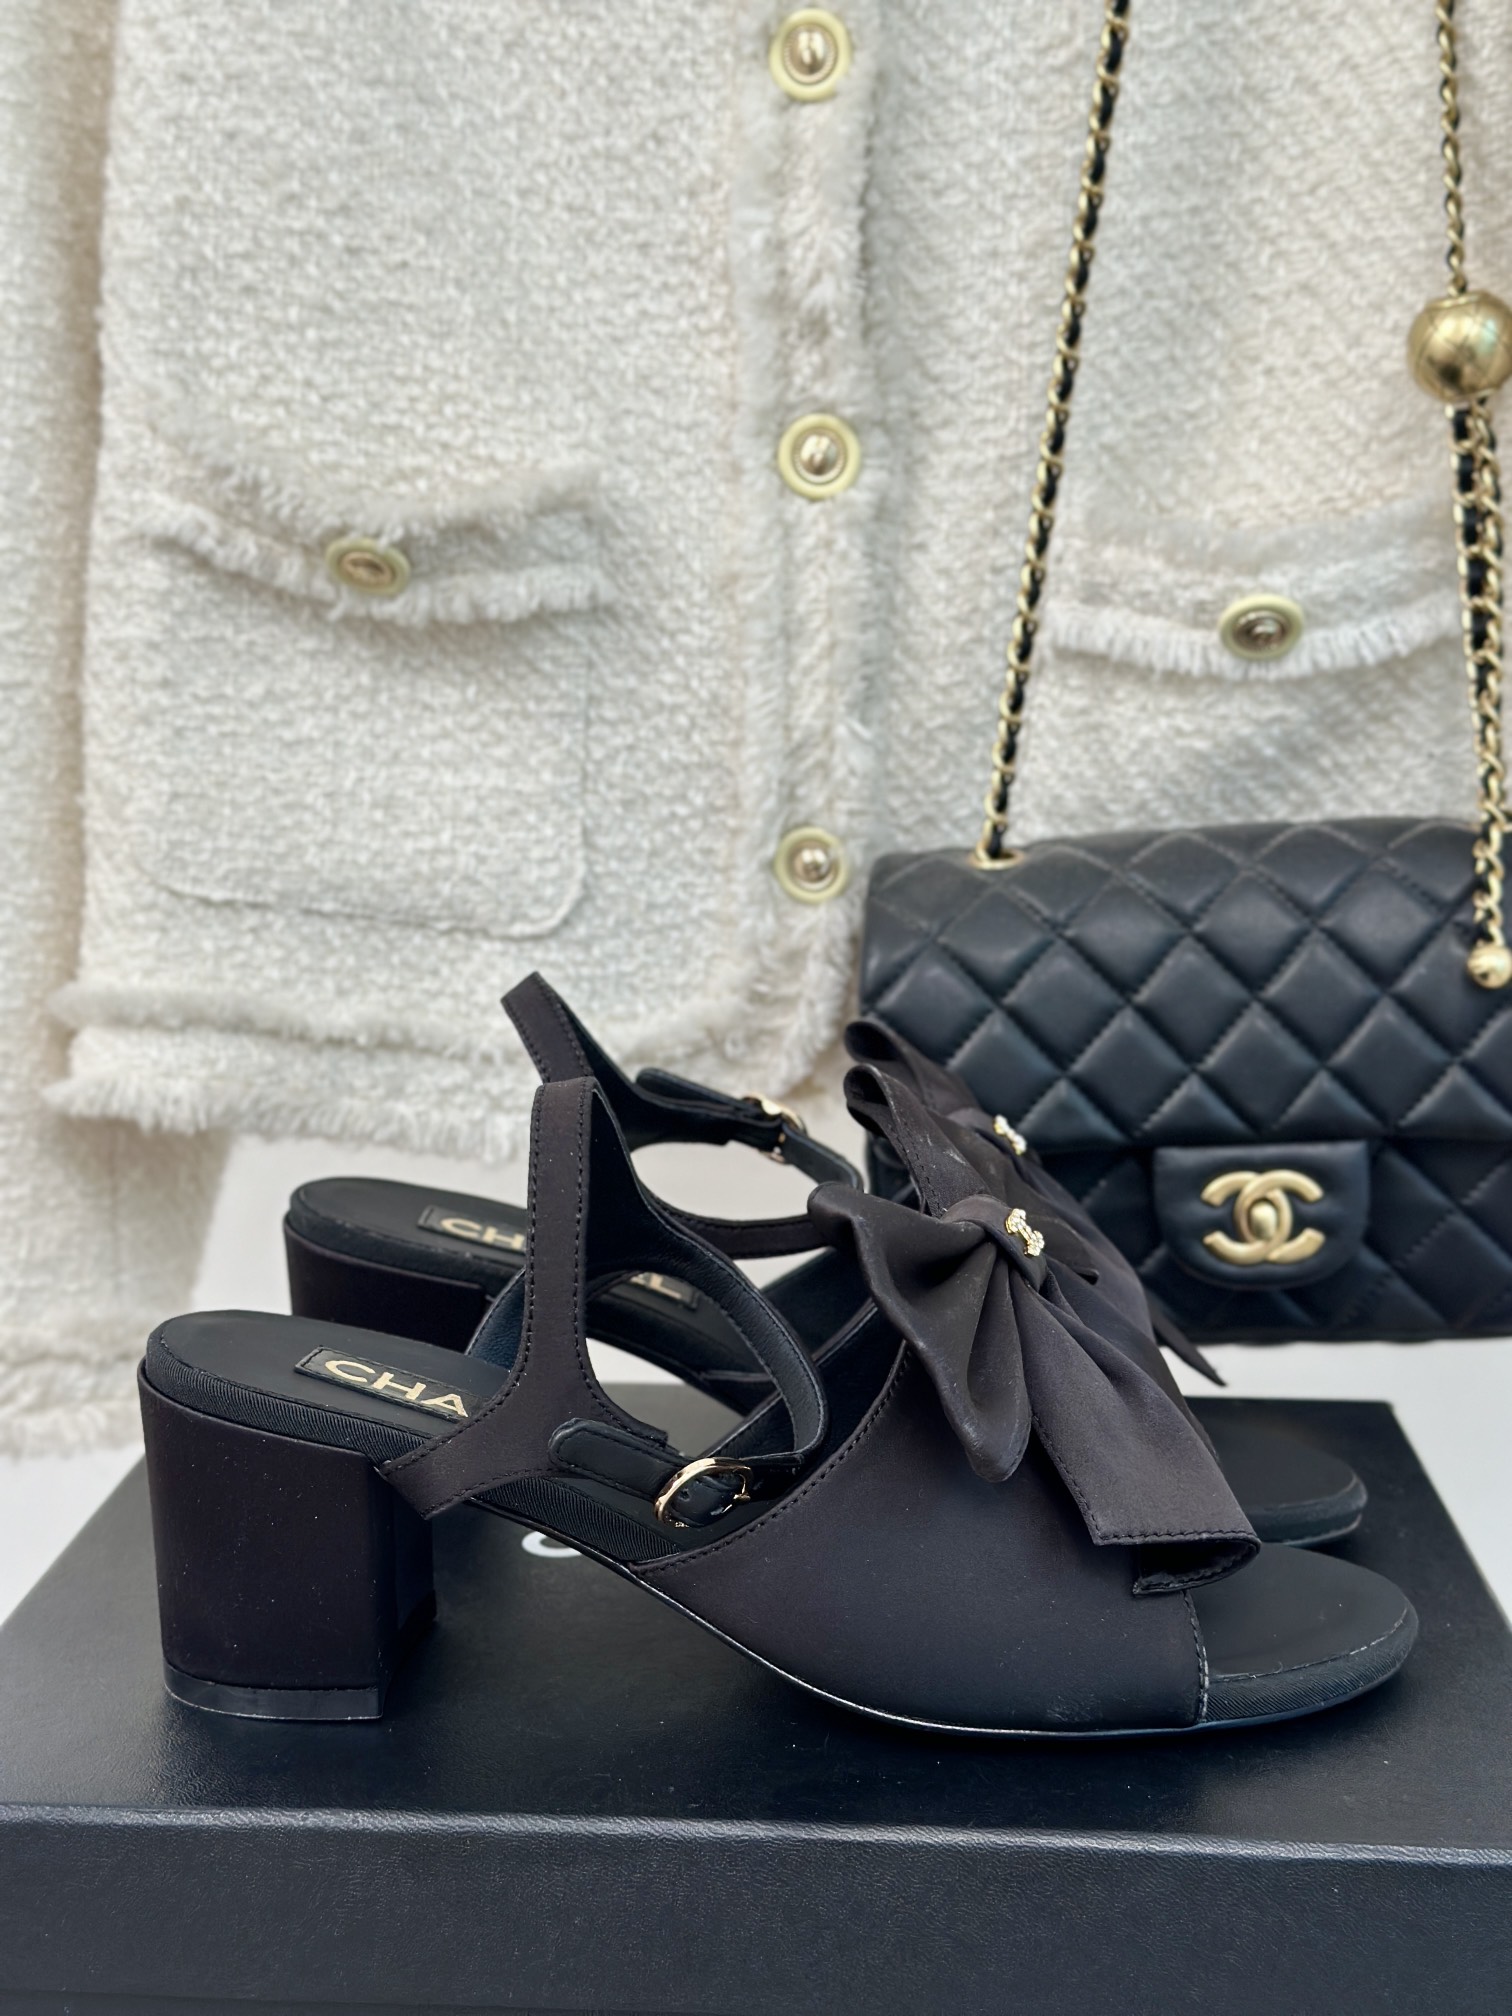 Chanel Scarpe Sandali Pantofole Pelle bovina di pecora Seta